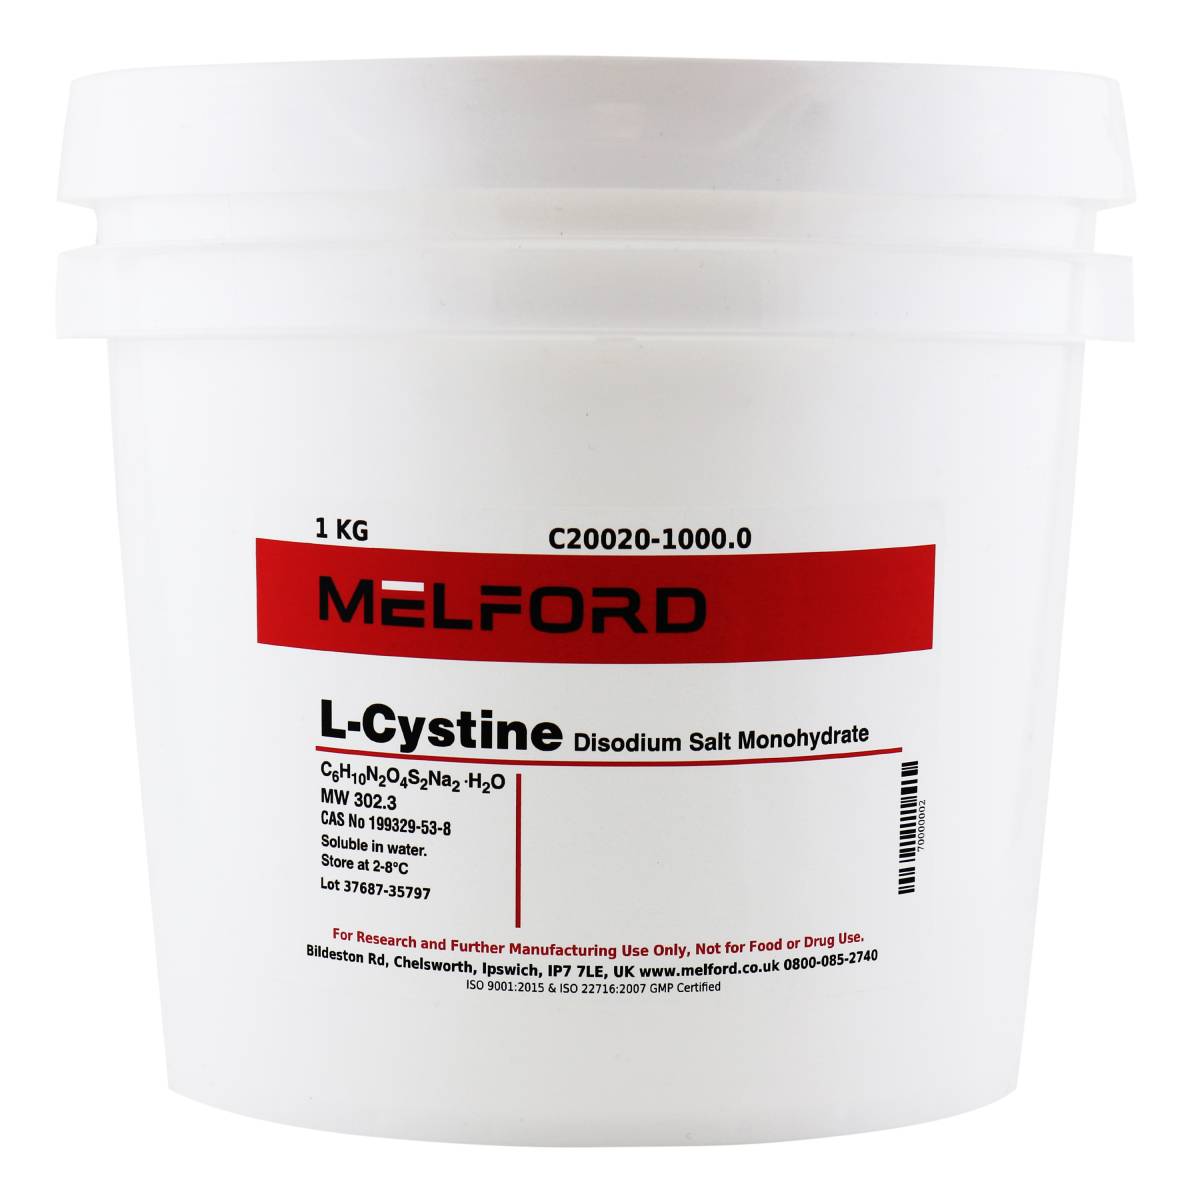 L-Cystine Disodium Salt Monohydrate, 1 Kilogram